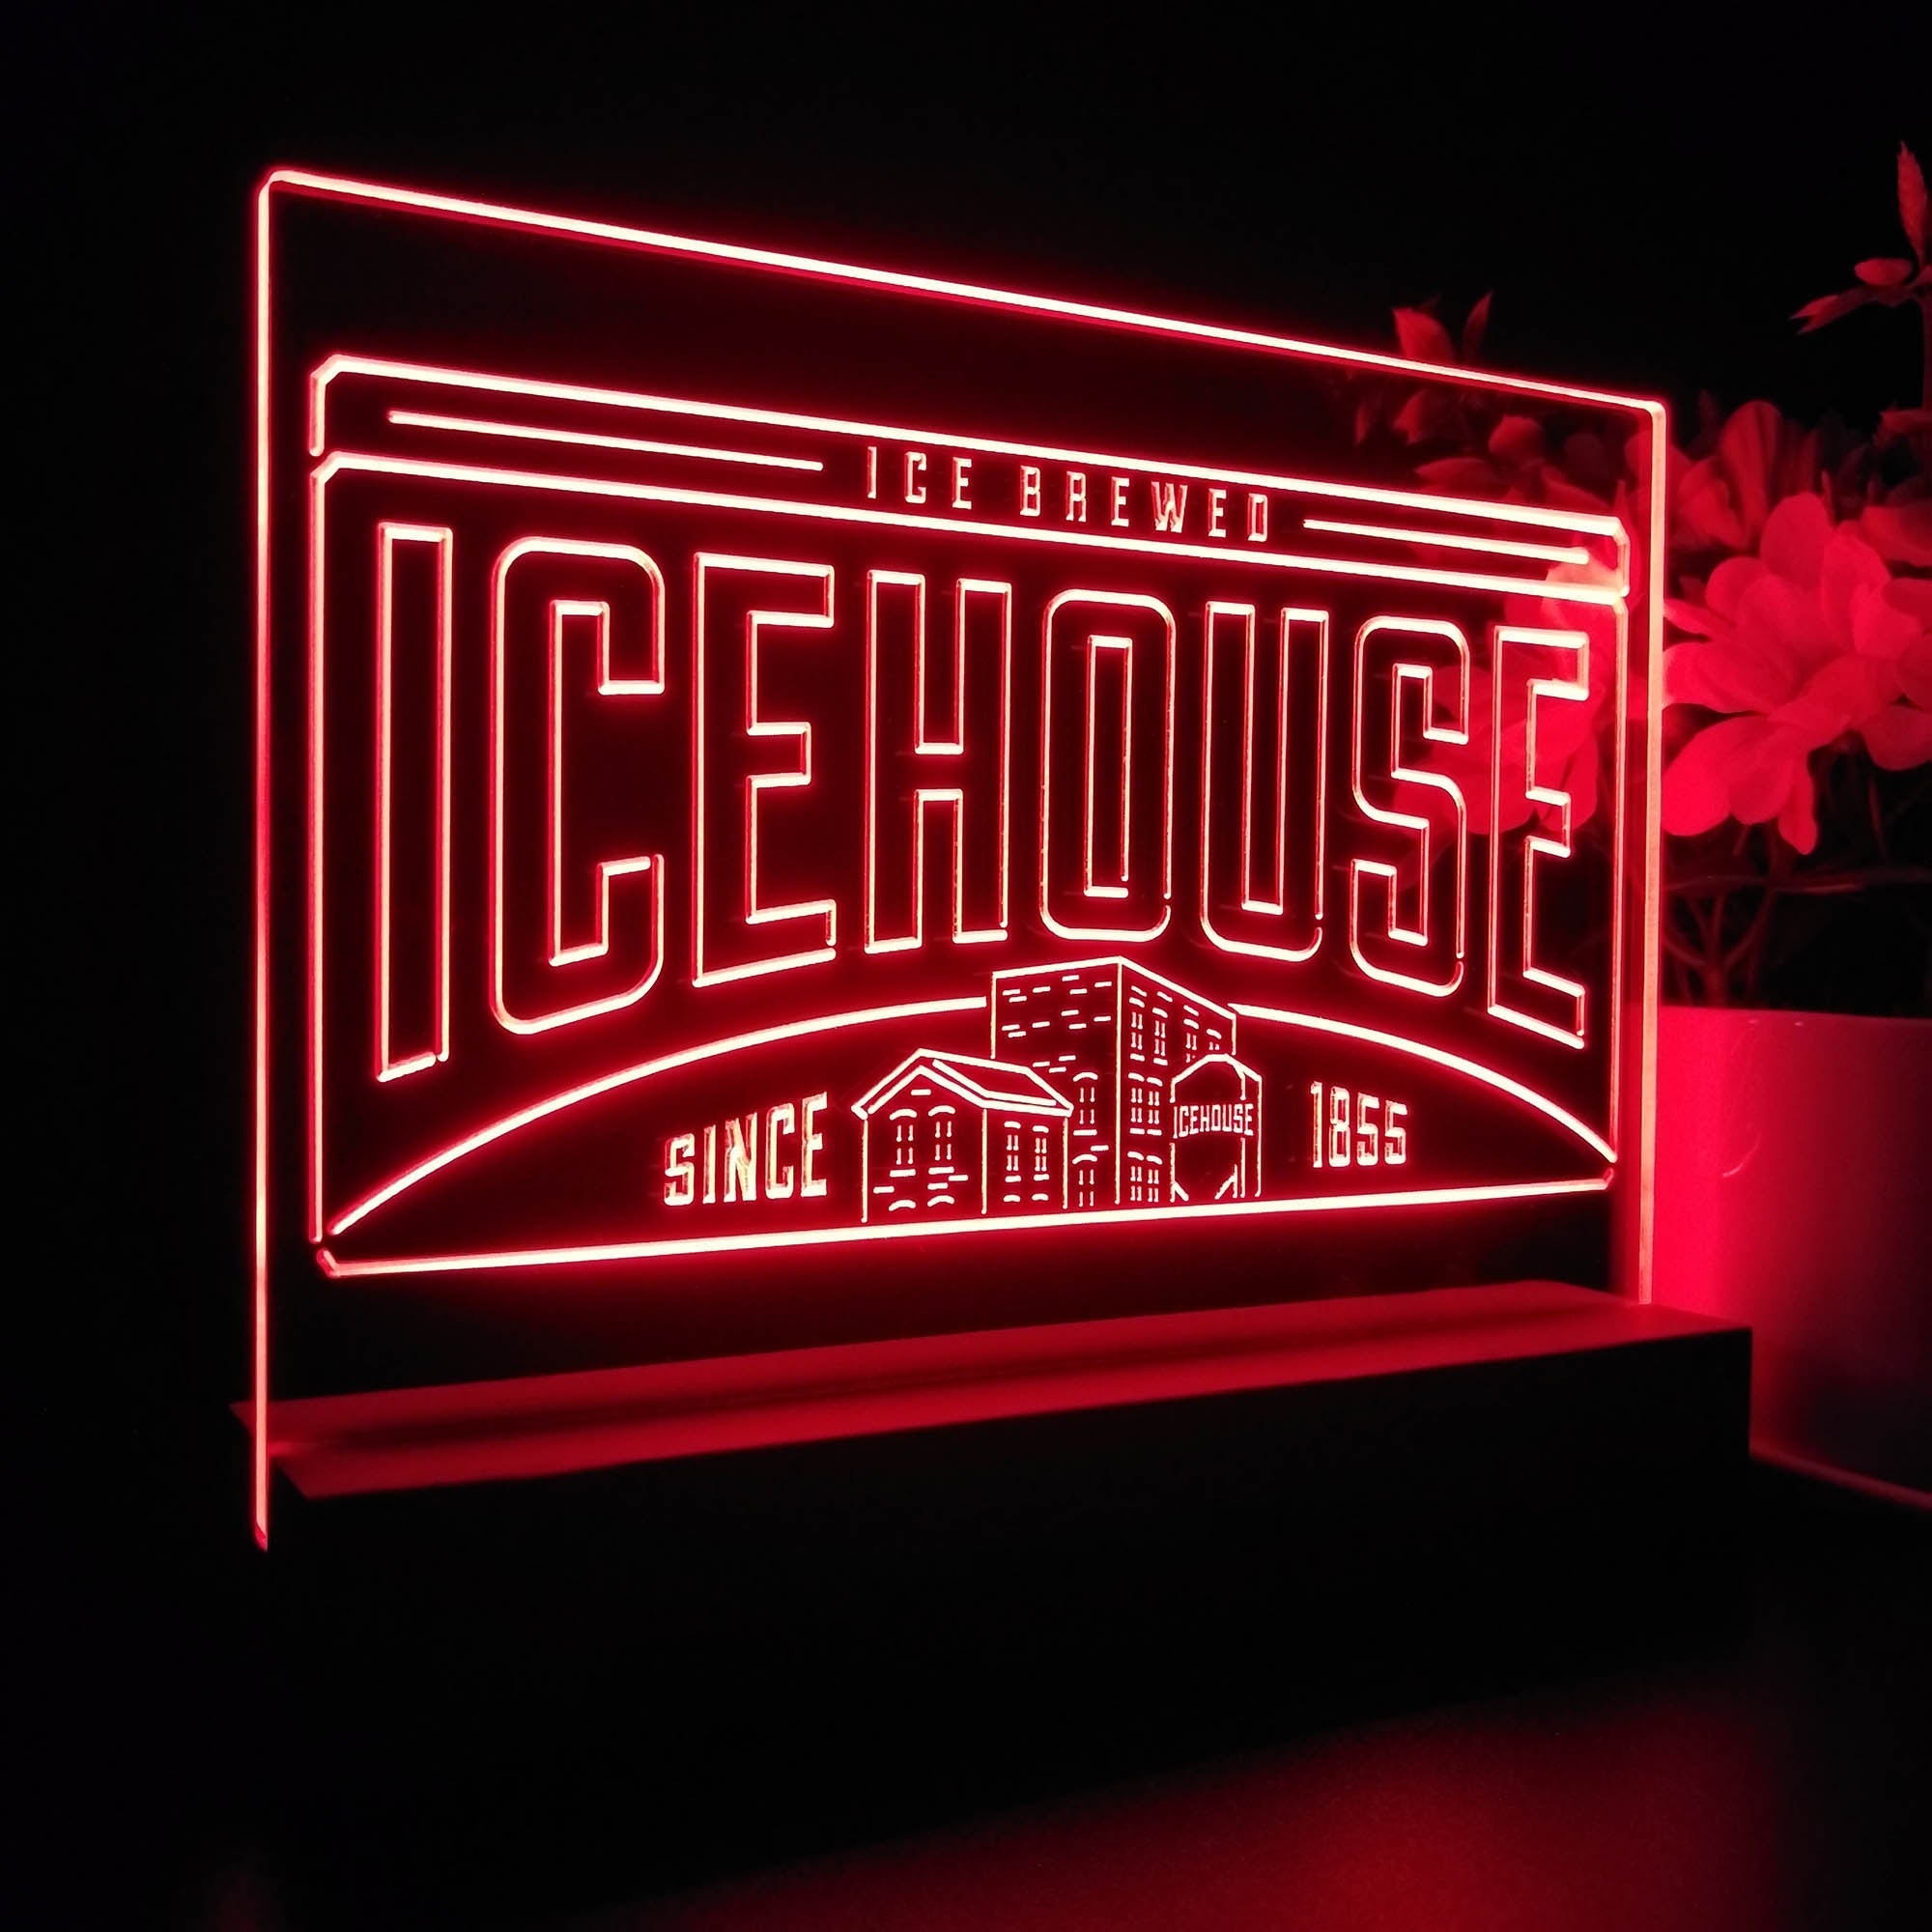 Icehouse Brewing Co. Neon Sign Pub Bar Decor Lamp